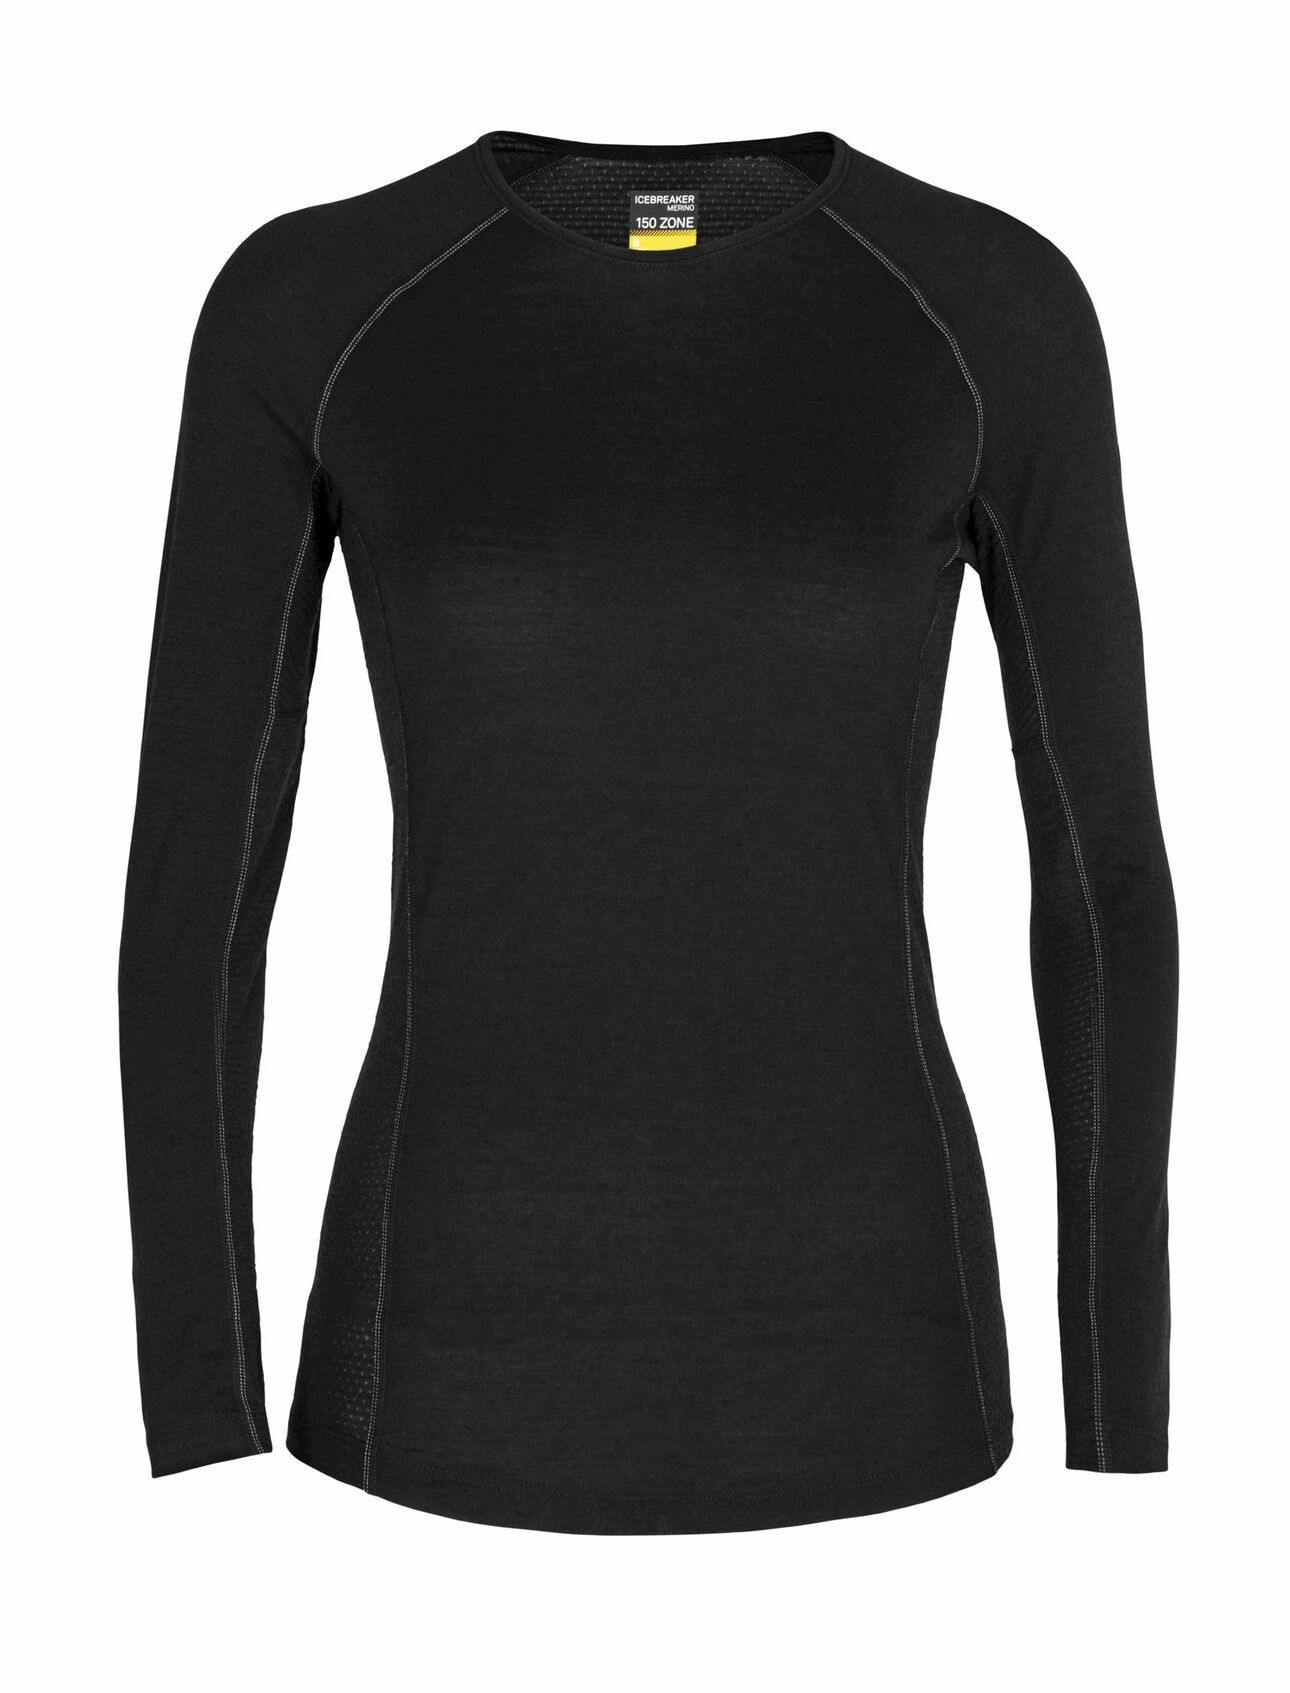 Icebreaker Women's 150 Zone Long Sleeve Baselayer Shirt